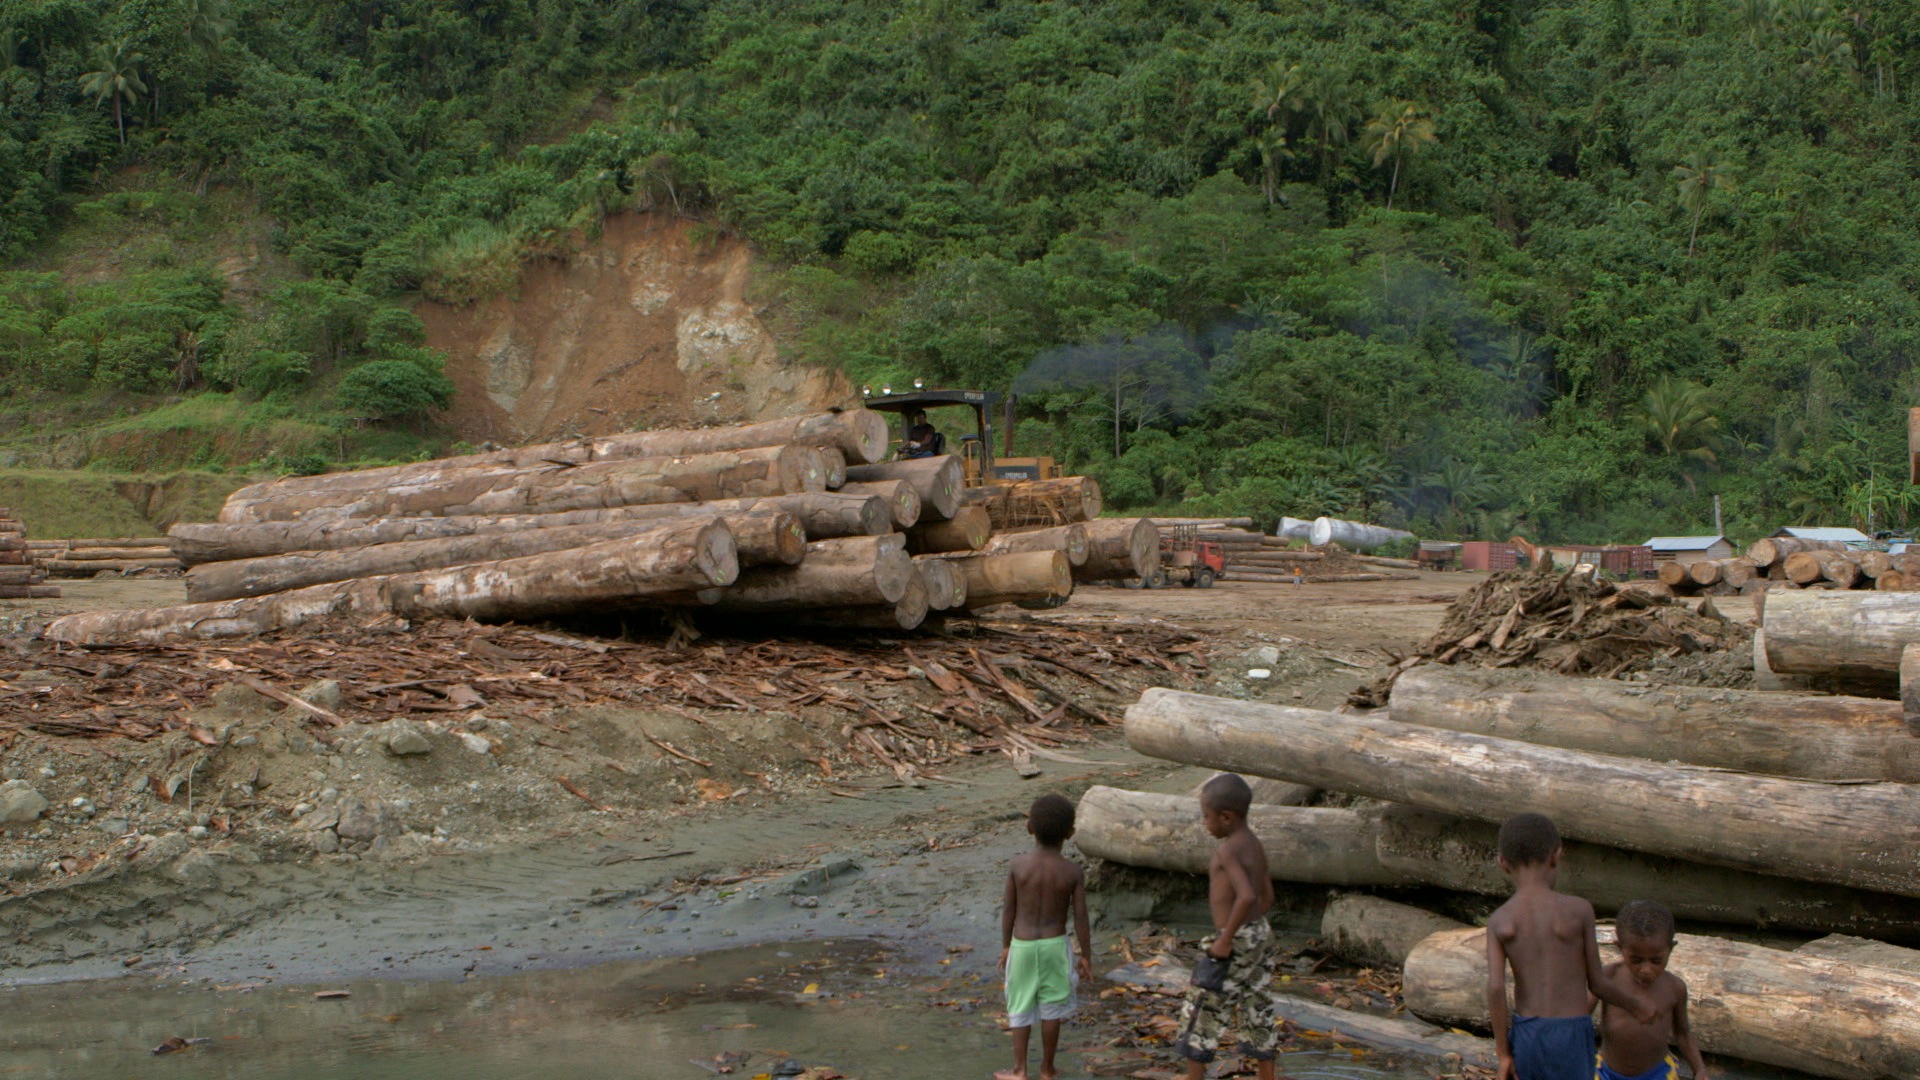 Ecuador: Stop land grabbing and racial discrimination for palm oil